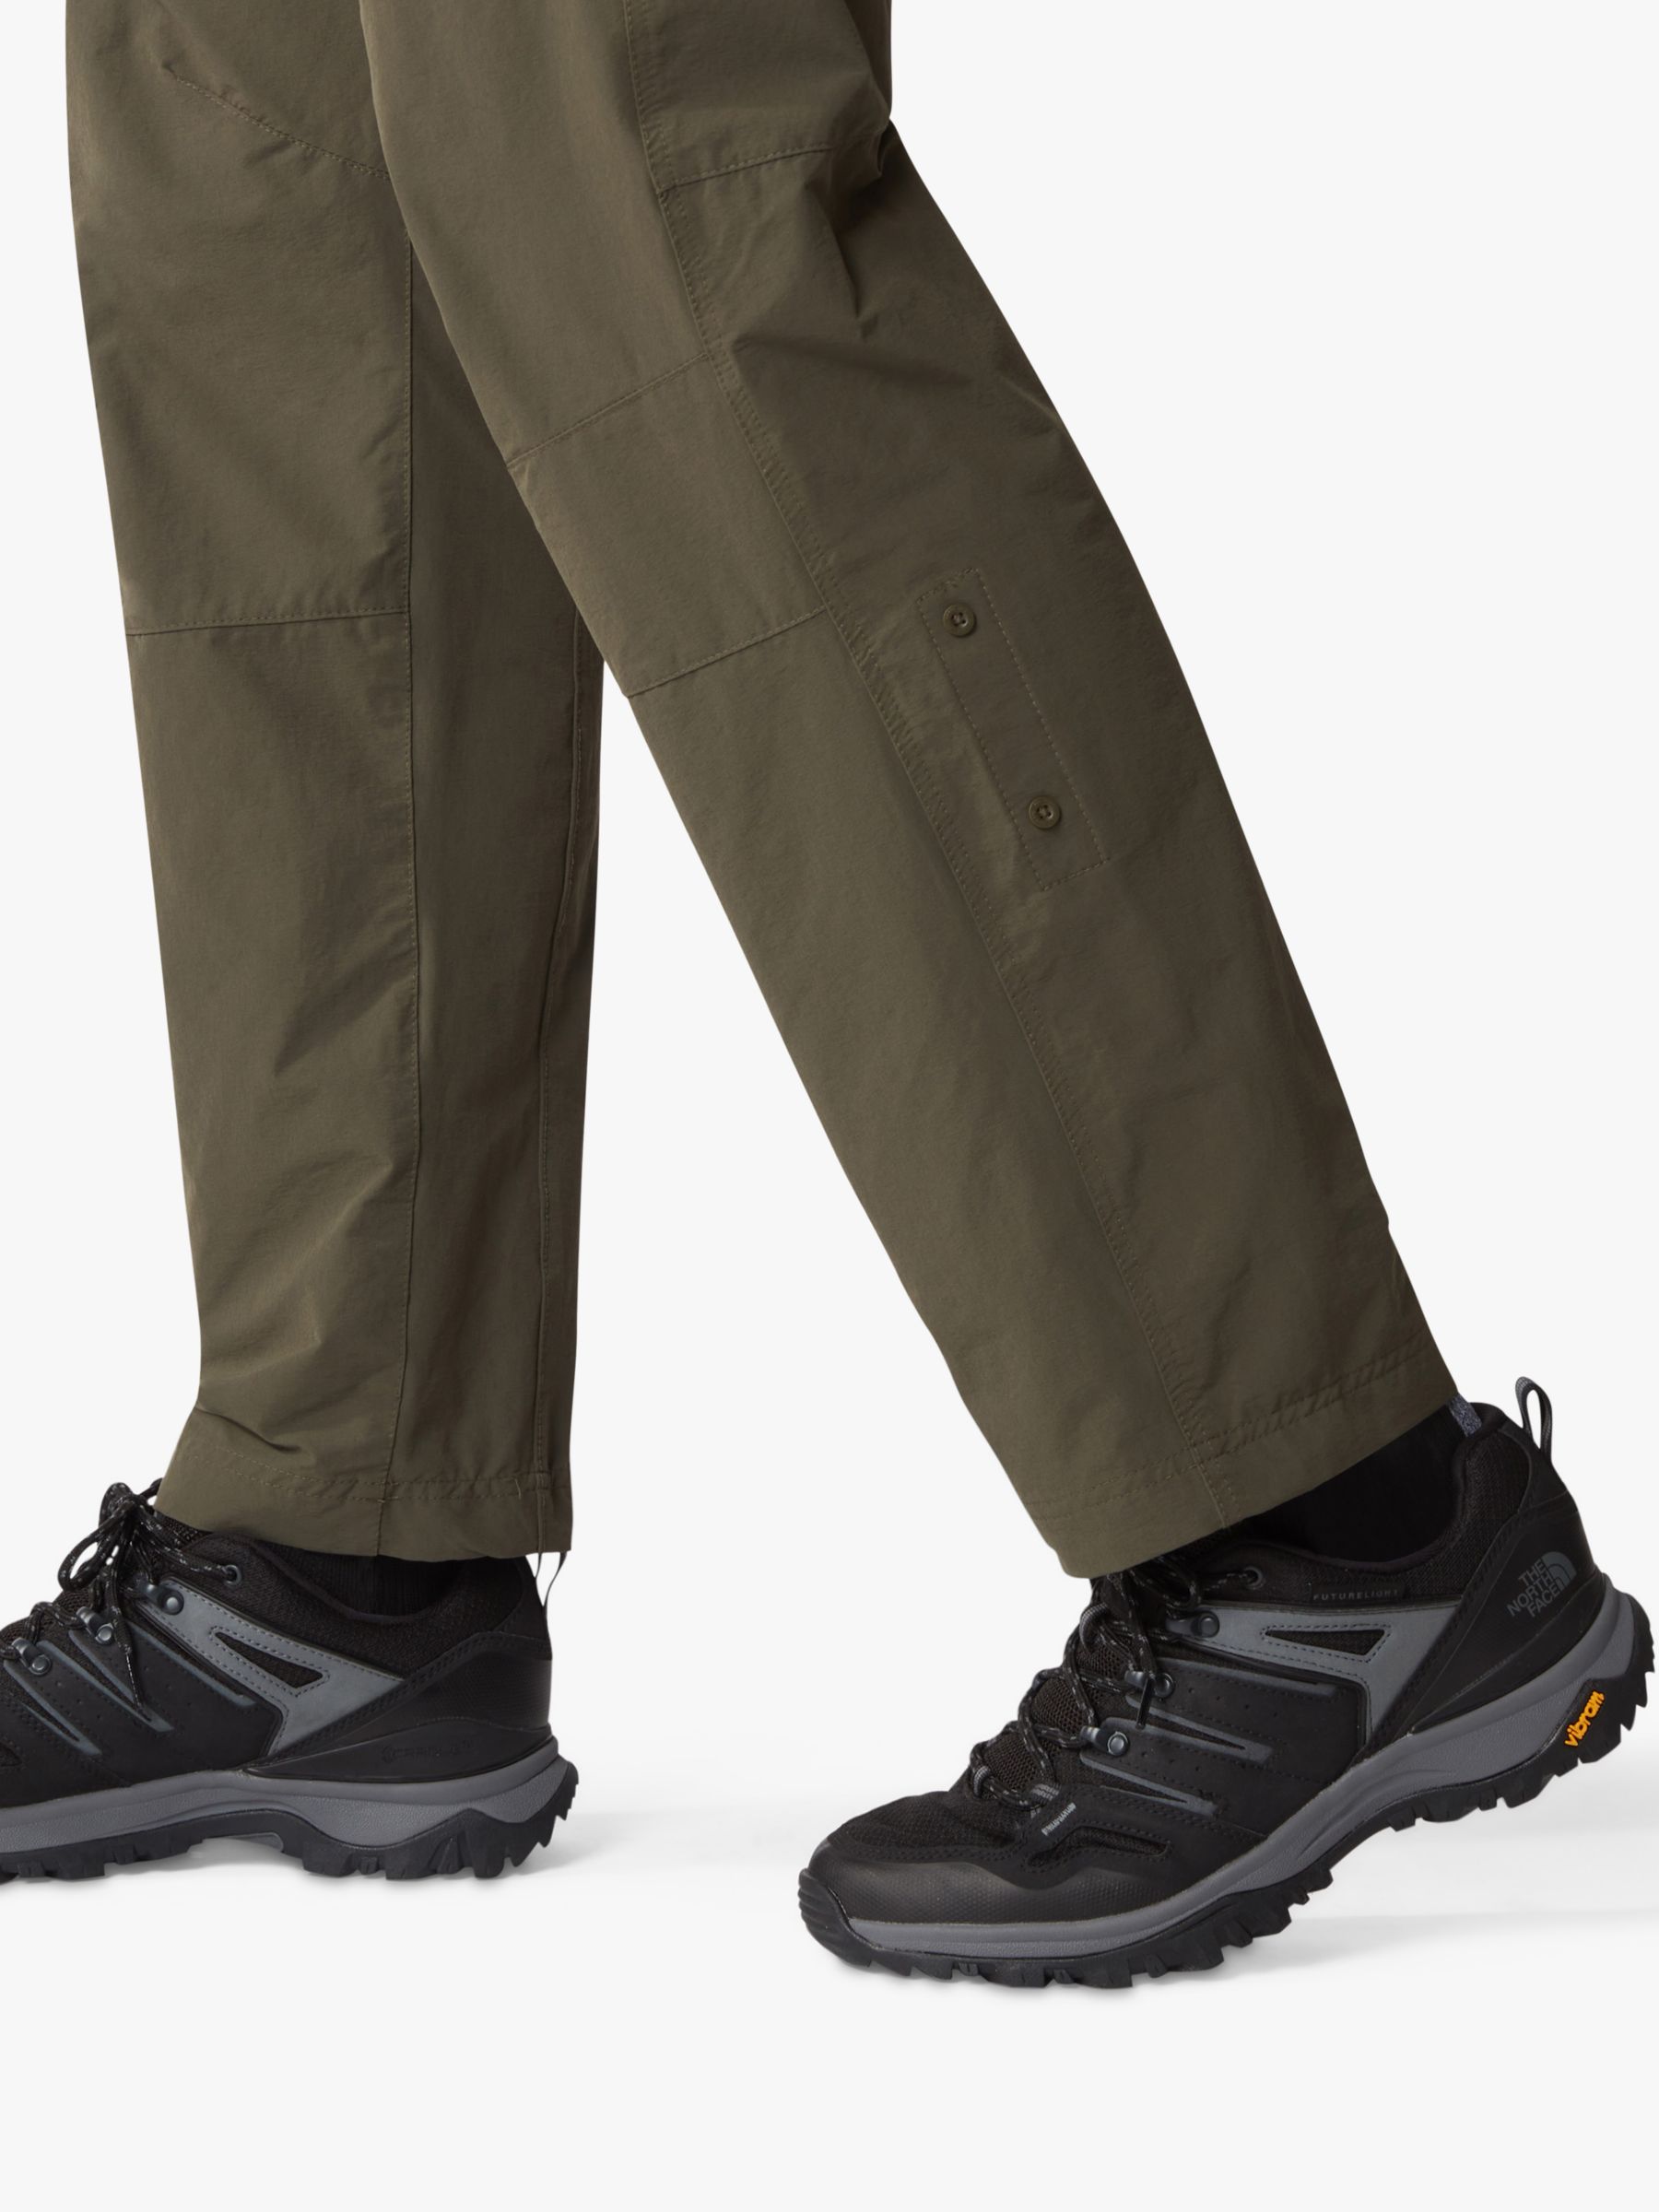 Buy The North Face Hedgehog Futurelight Hiking Shoes, Black/Zinc Grey Online at johnlewis.com